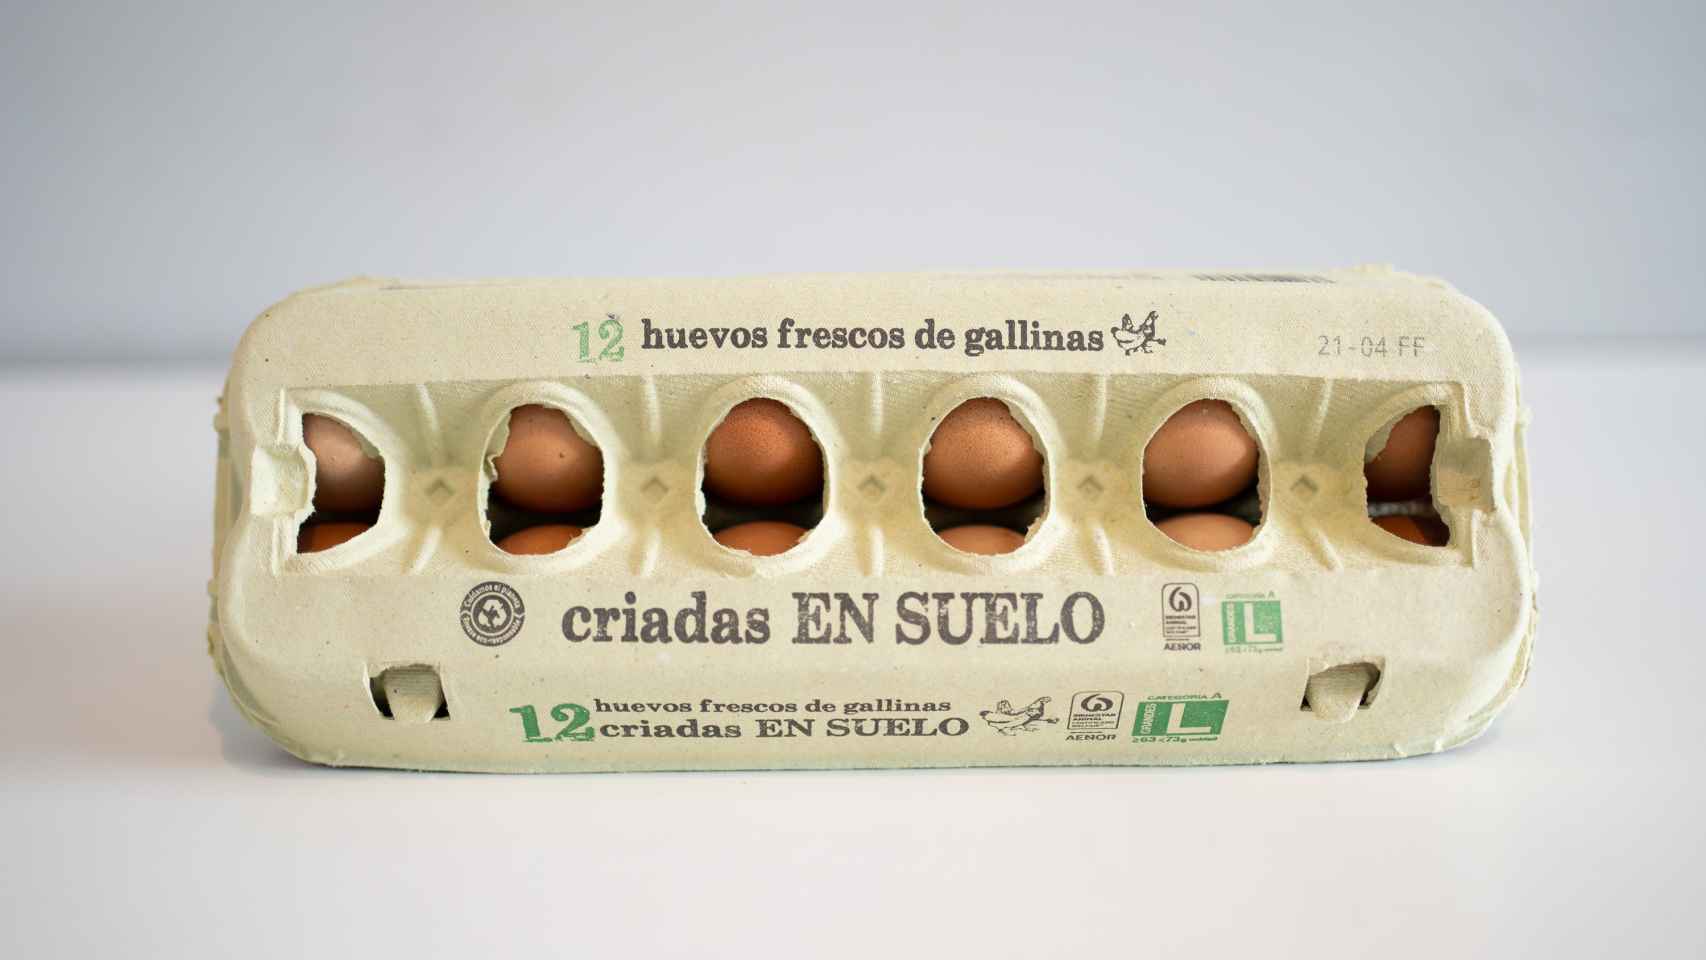 El paquete de doce huevos de Lidl.